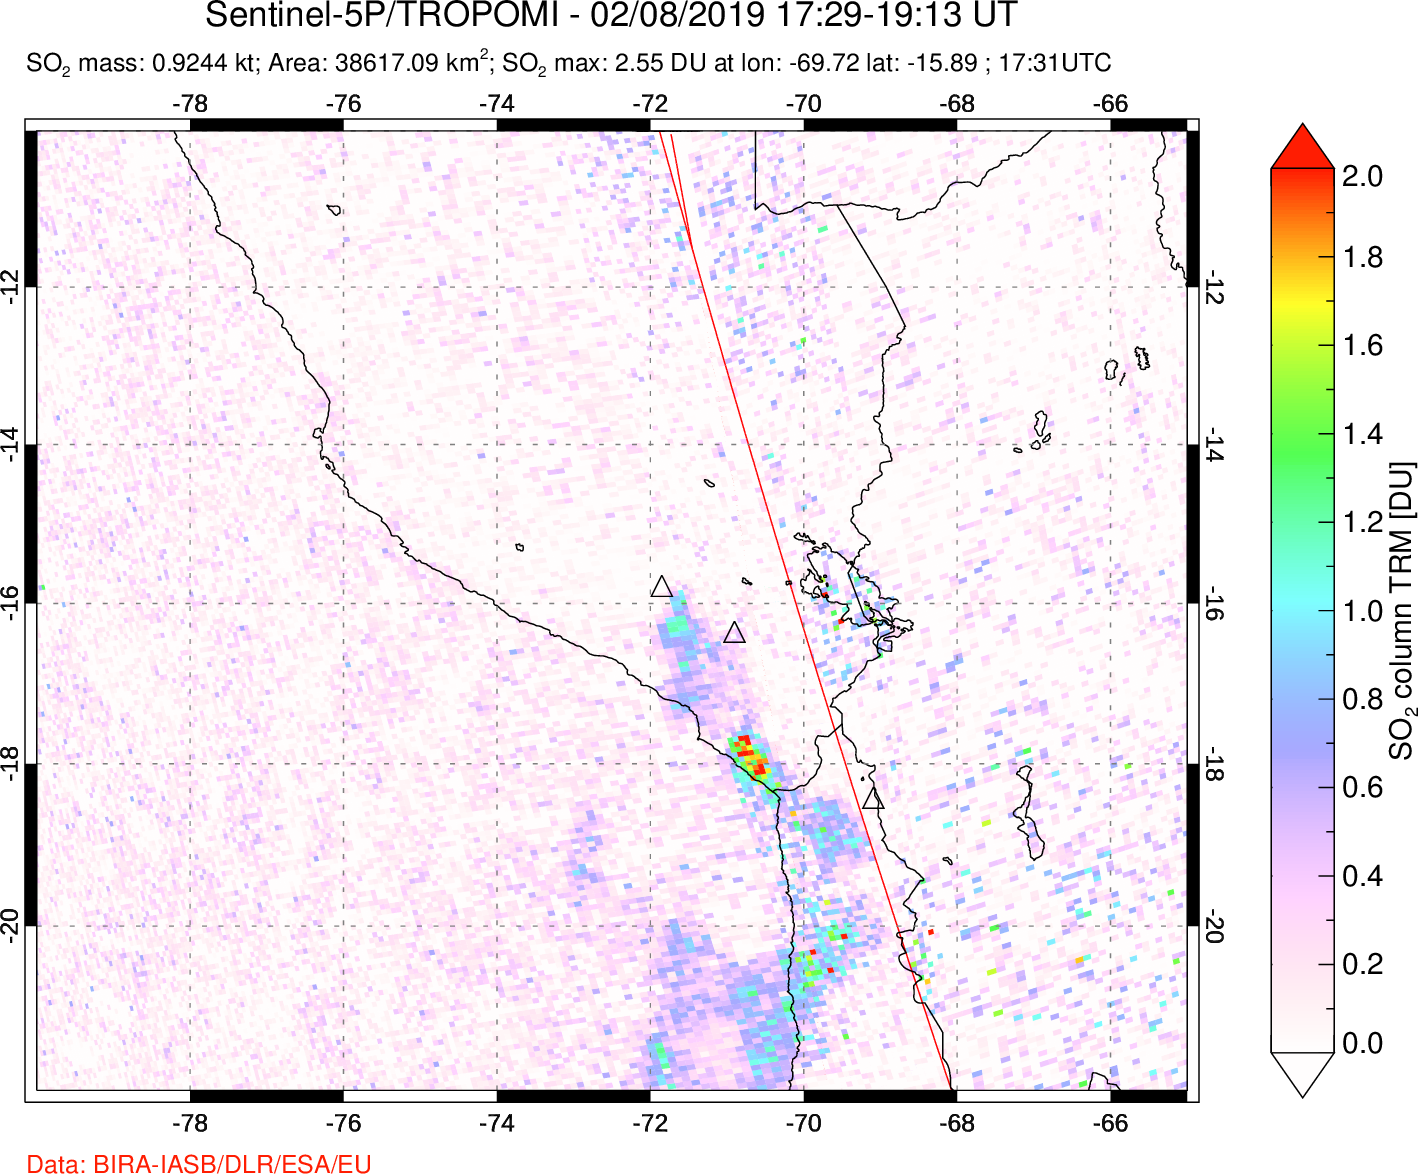 A sulfur dioxide image over Peru on Feb 08, 2019.